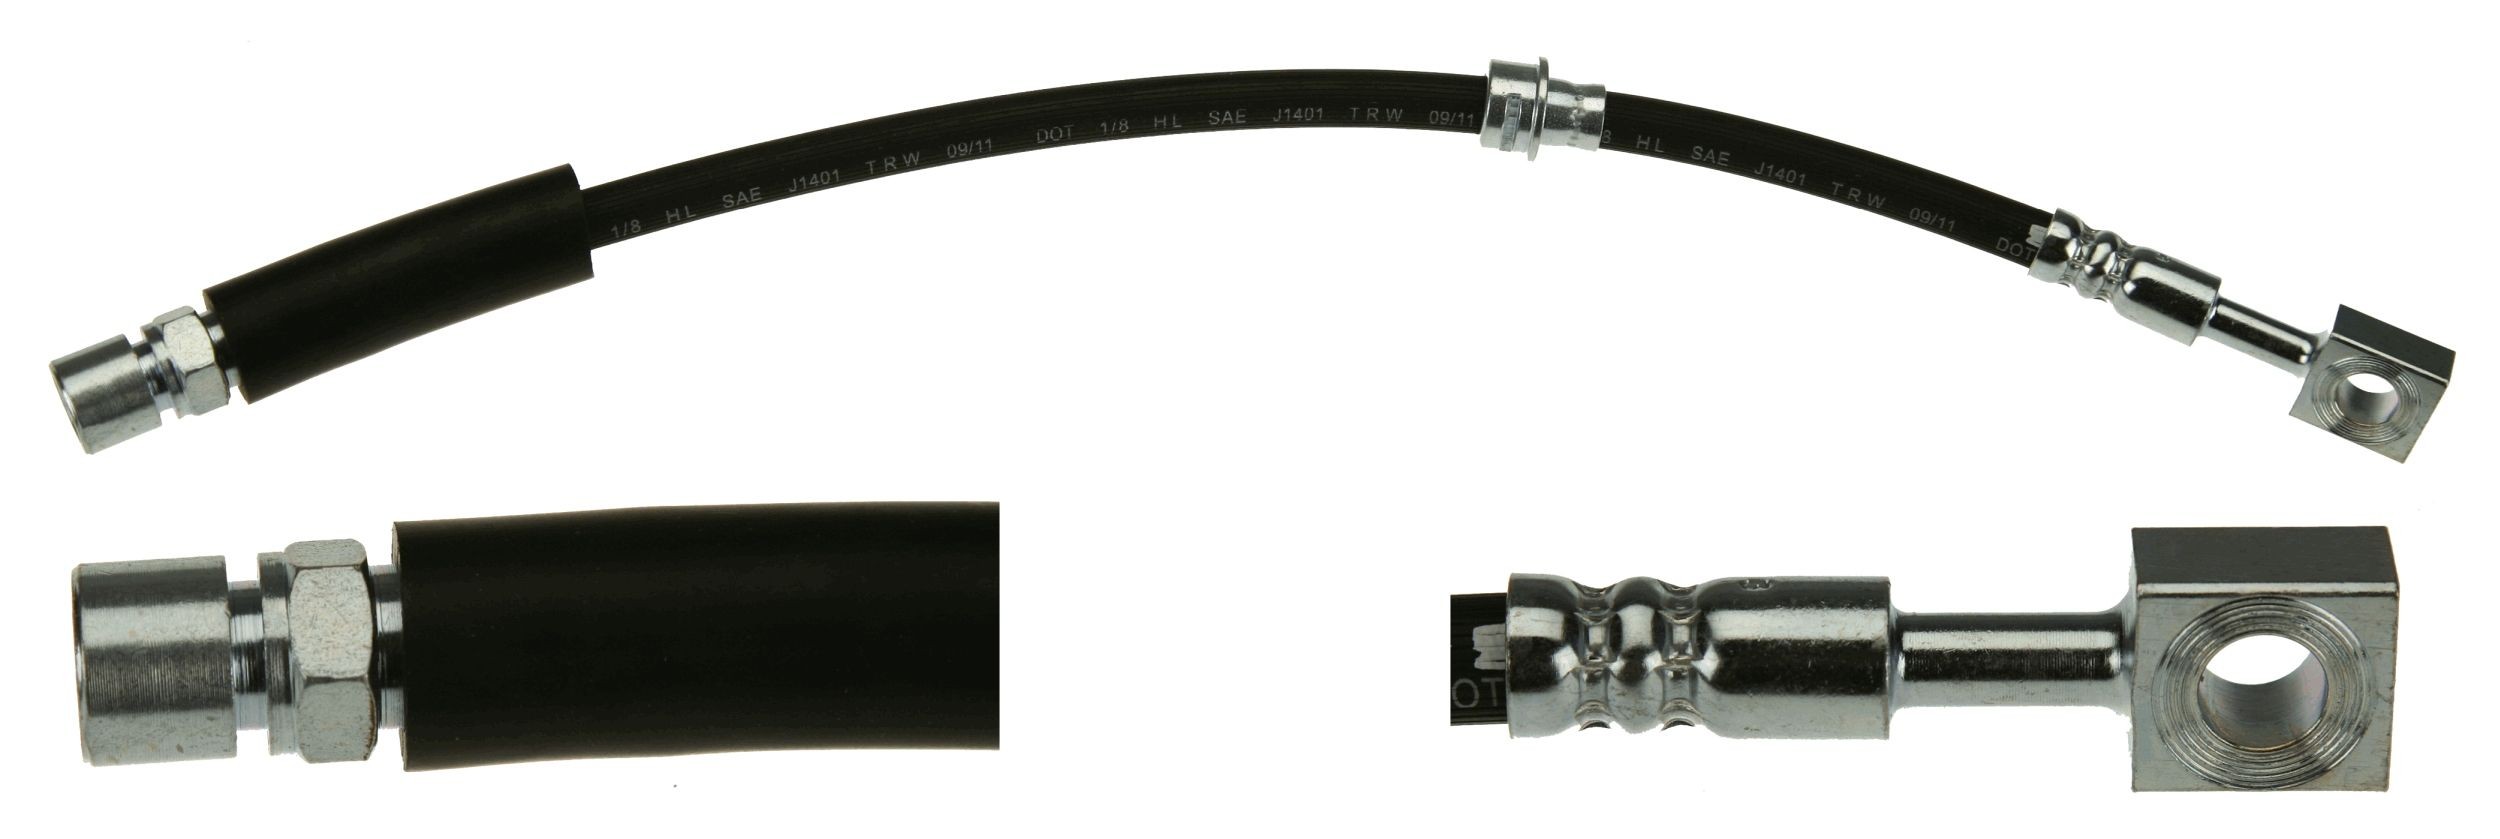 TRW 409 mm, M10x1, Internal Thread Length: 409mm, Thread Size 1: M10x1, Thread Size 2: Banjo Brake line PHA337 buy